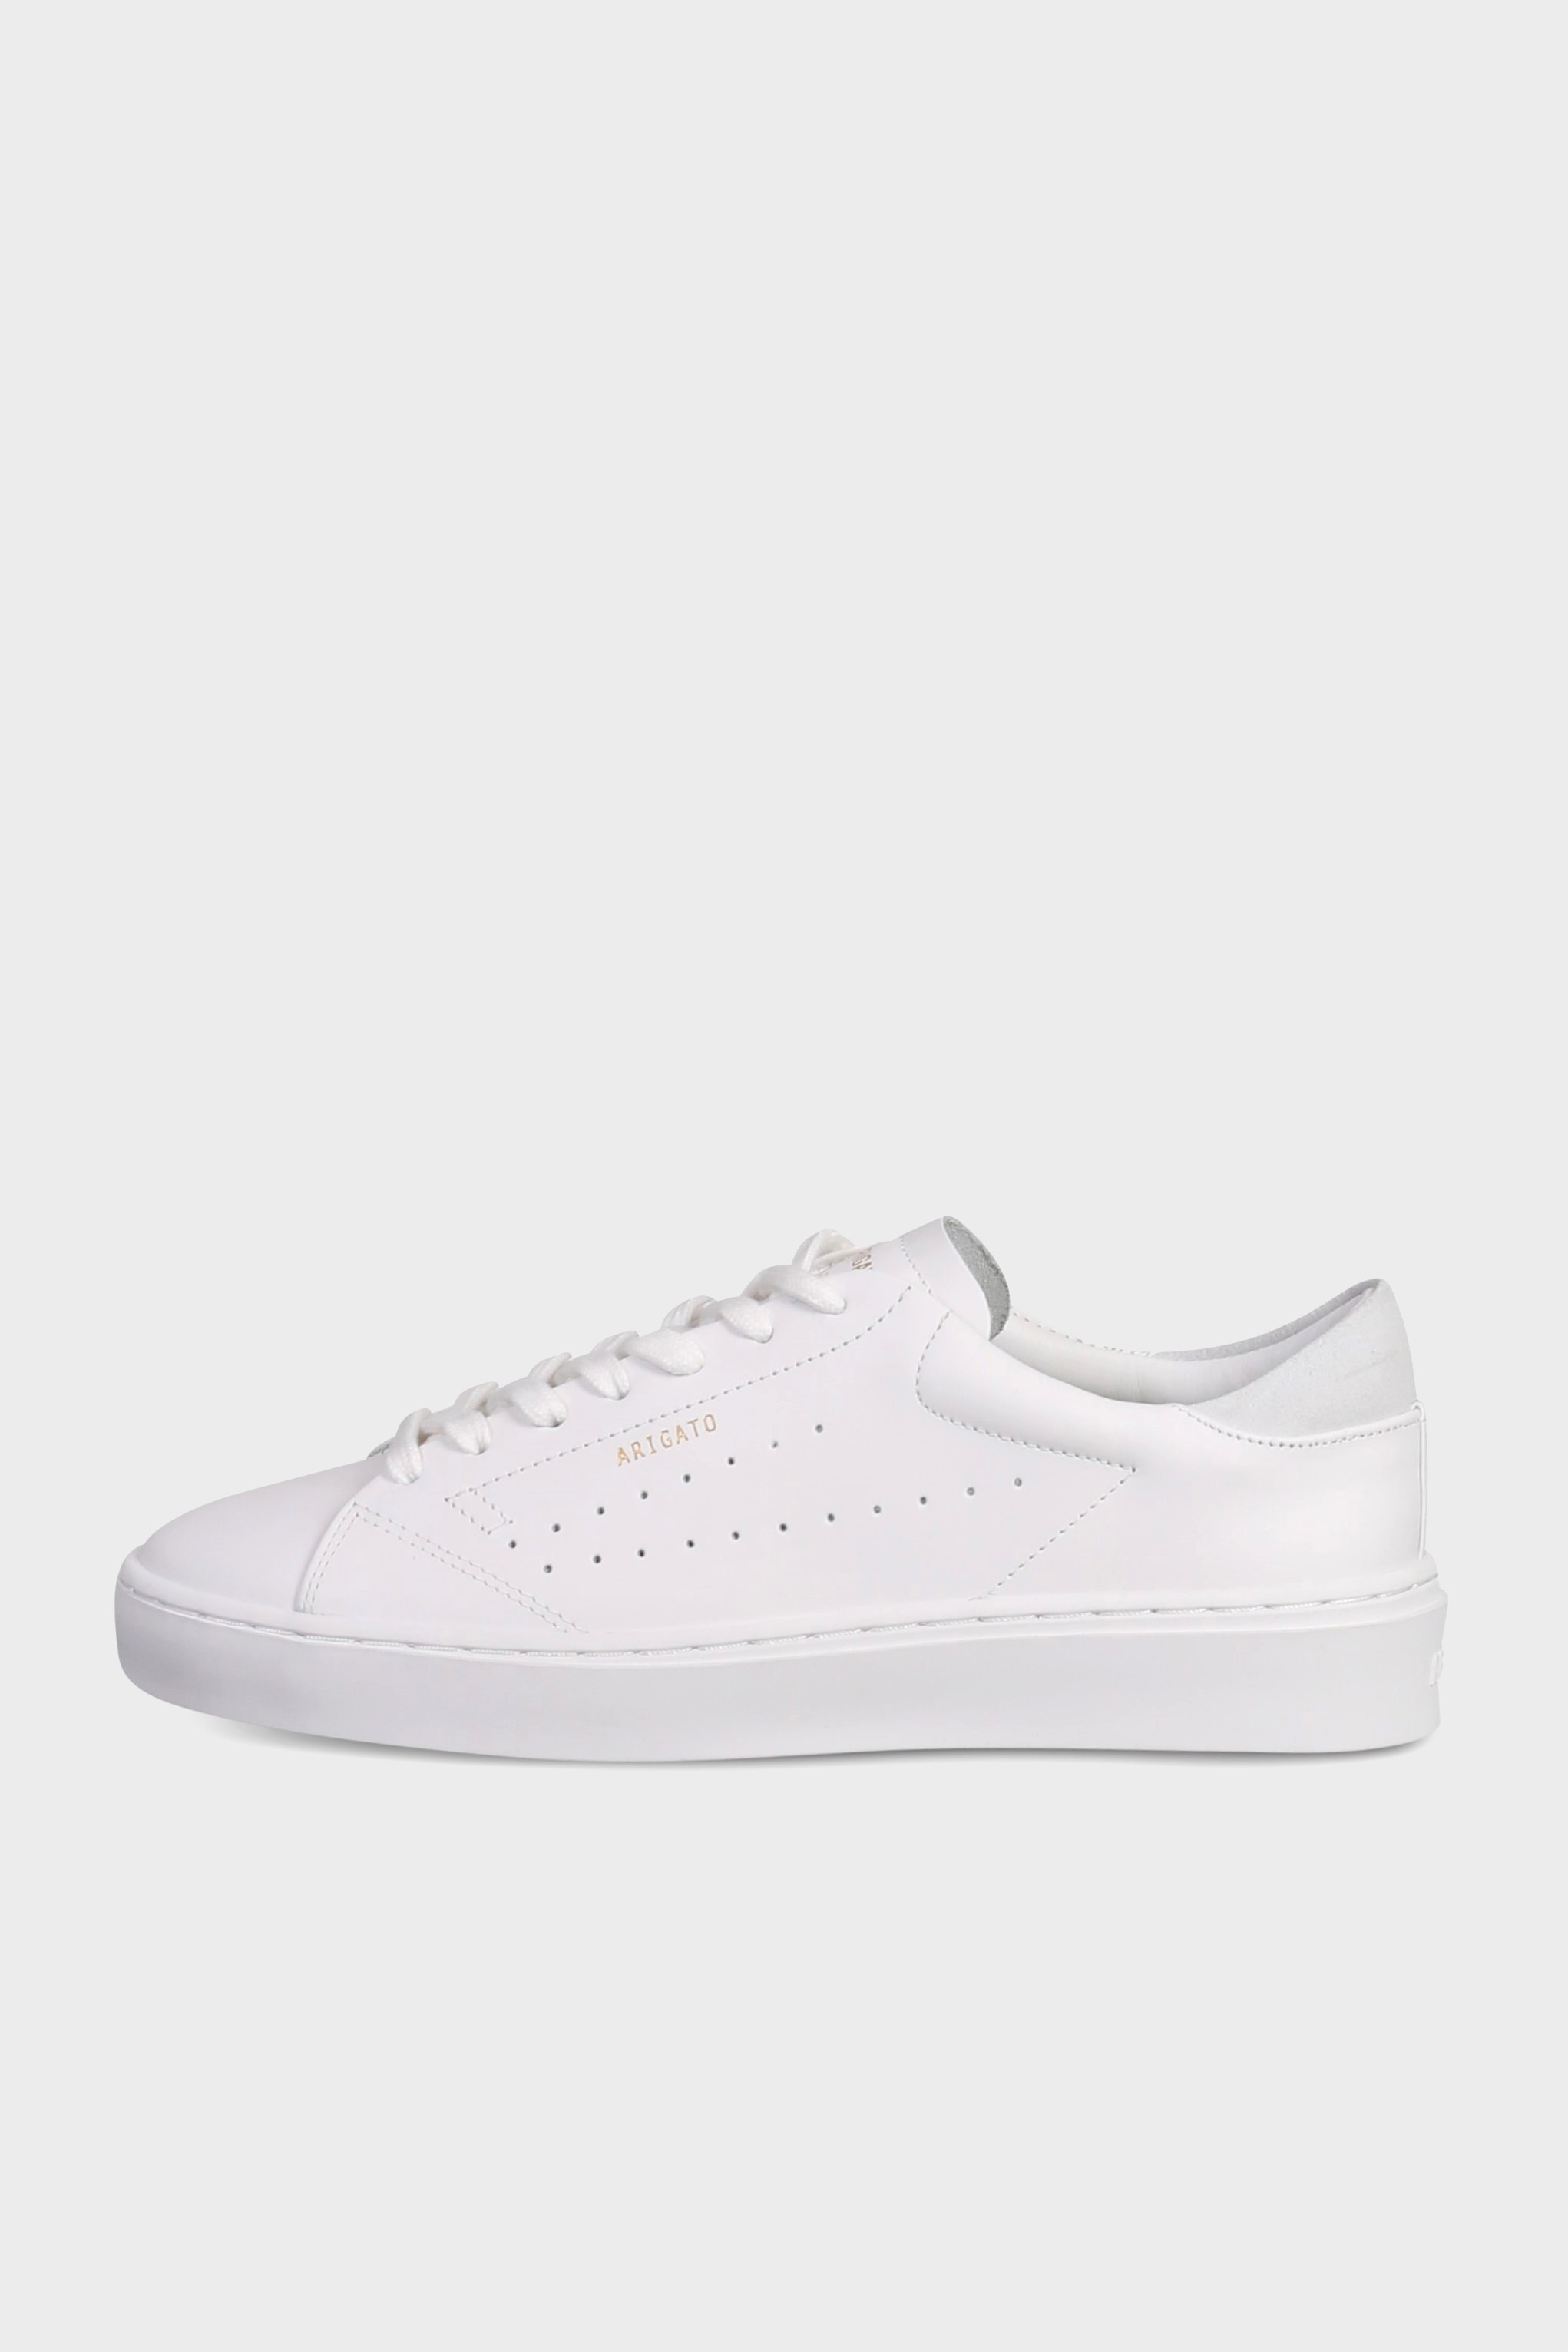 AXEL ARIGATO Court Sneaker in White/Light Grey